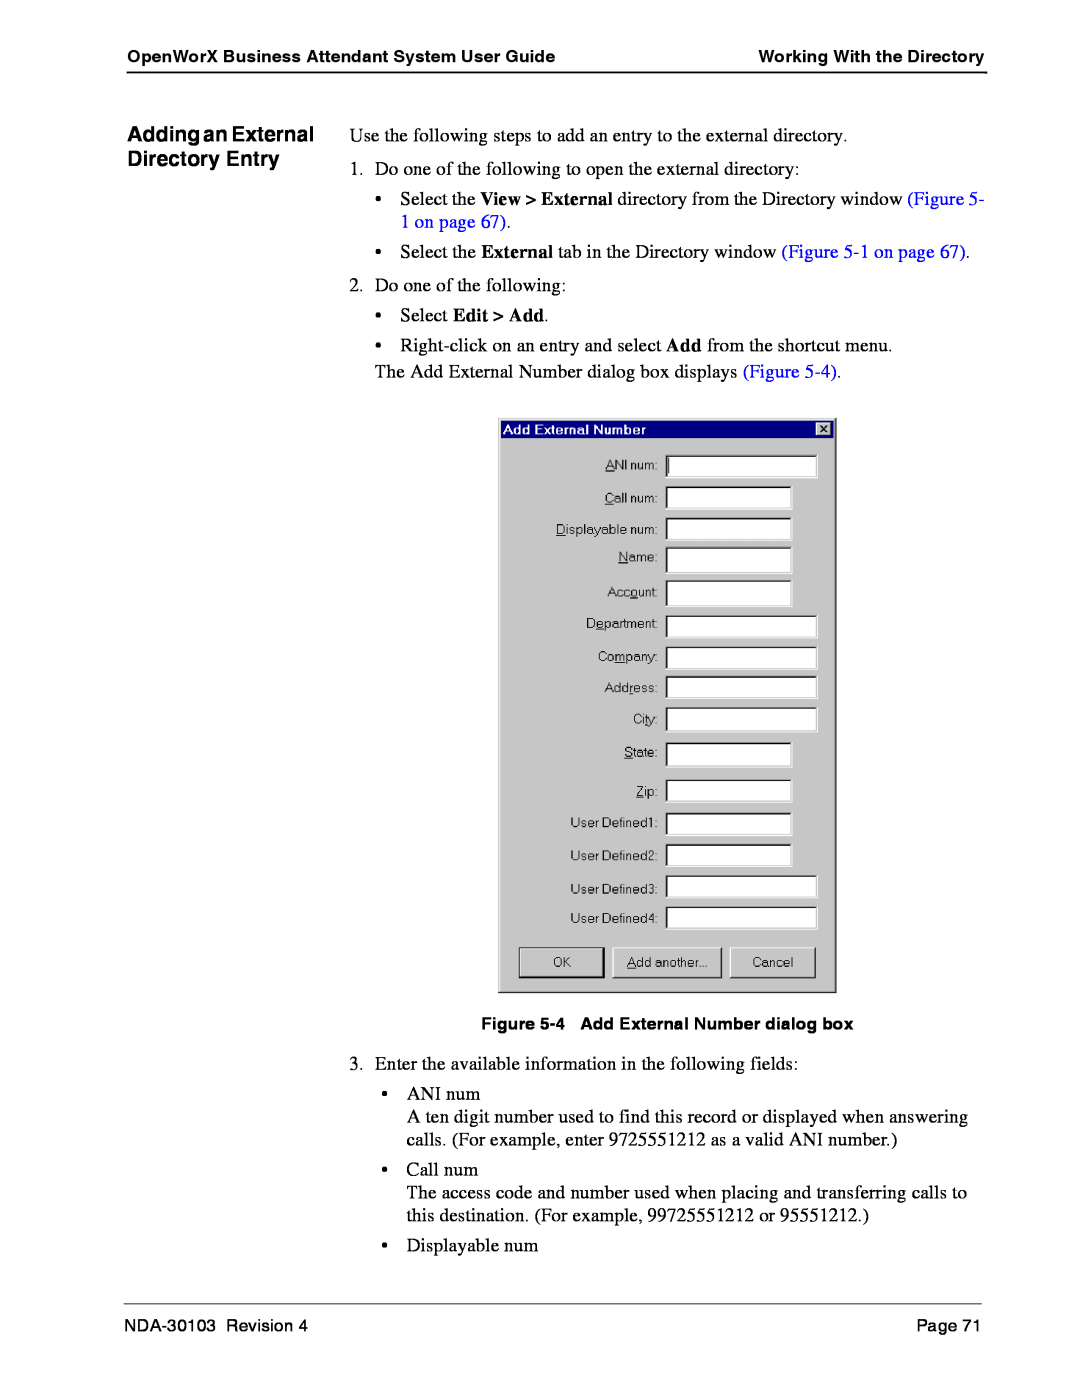 NEC NDA-30103-004 manual Adding an External Directory Entry 